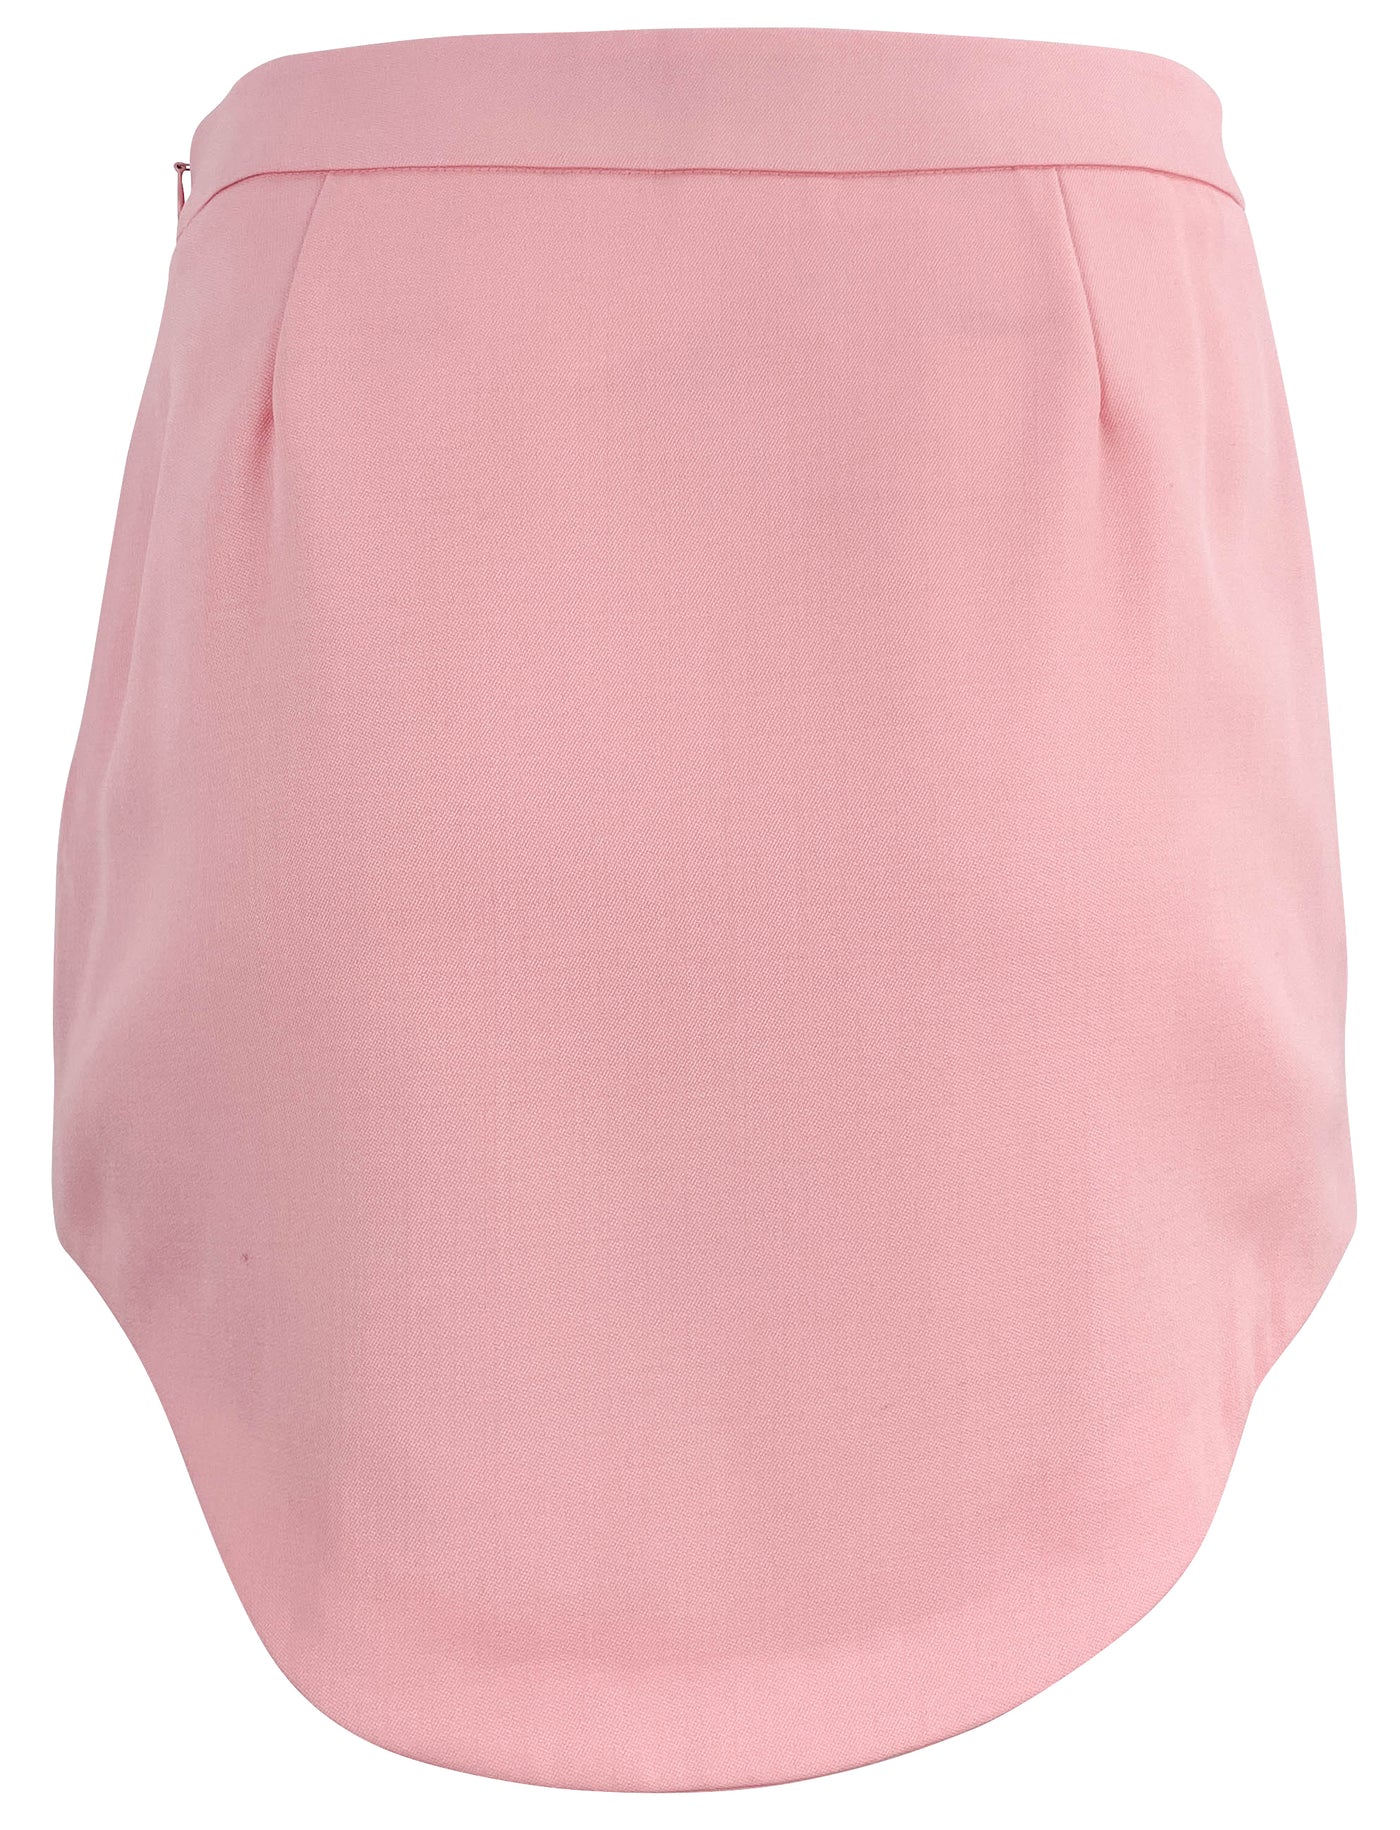 Casablanca Wool Mini Skirt in Pink - Discounts on Casablanca at UAL